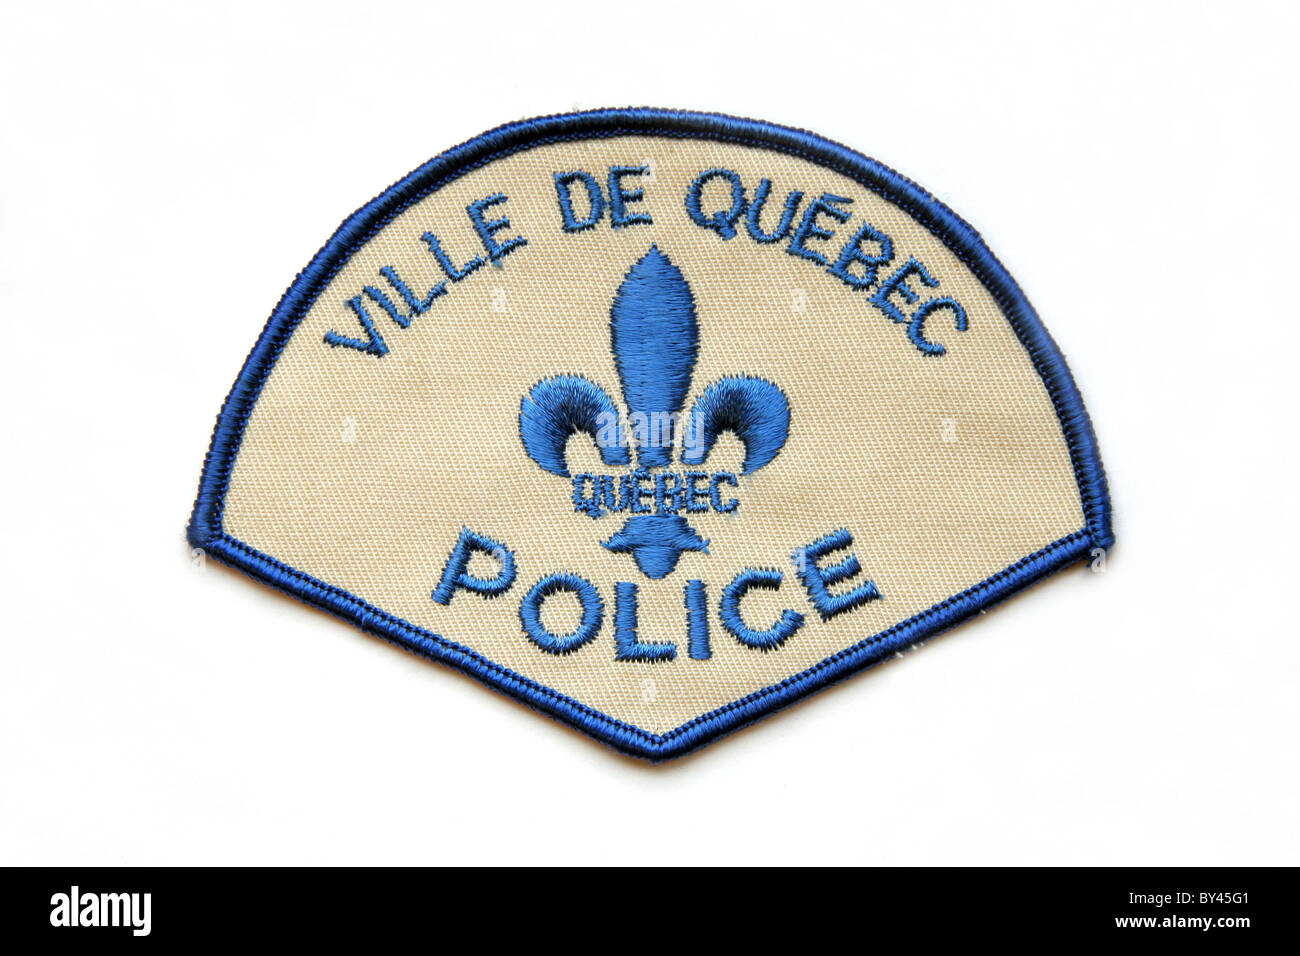 Ville De Quebec, Quebec City Police patch Canada Stock Photo - Alamy